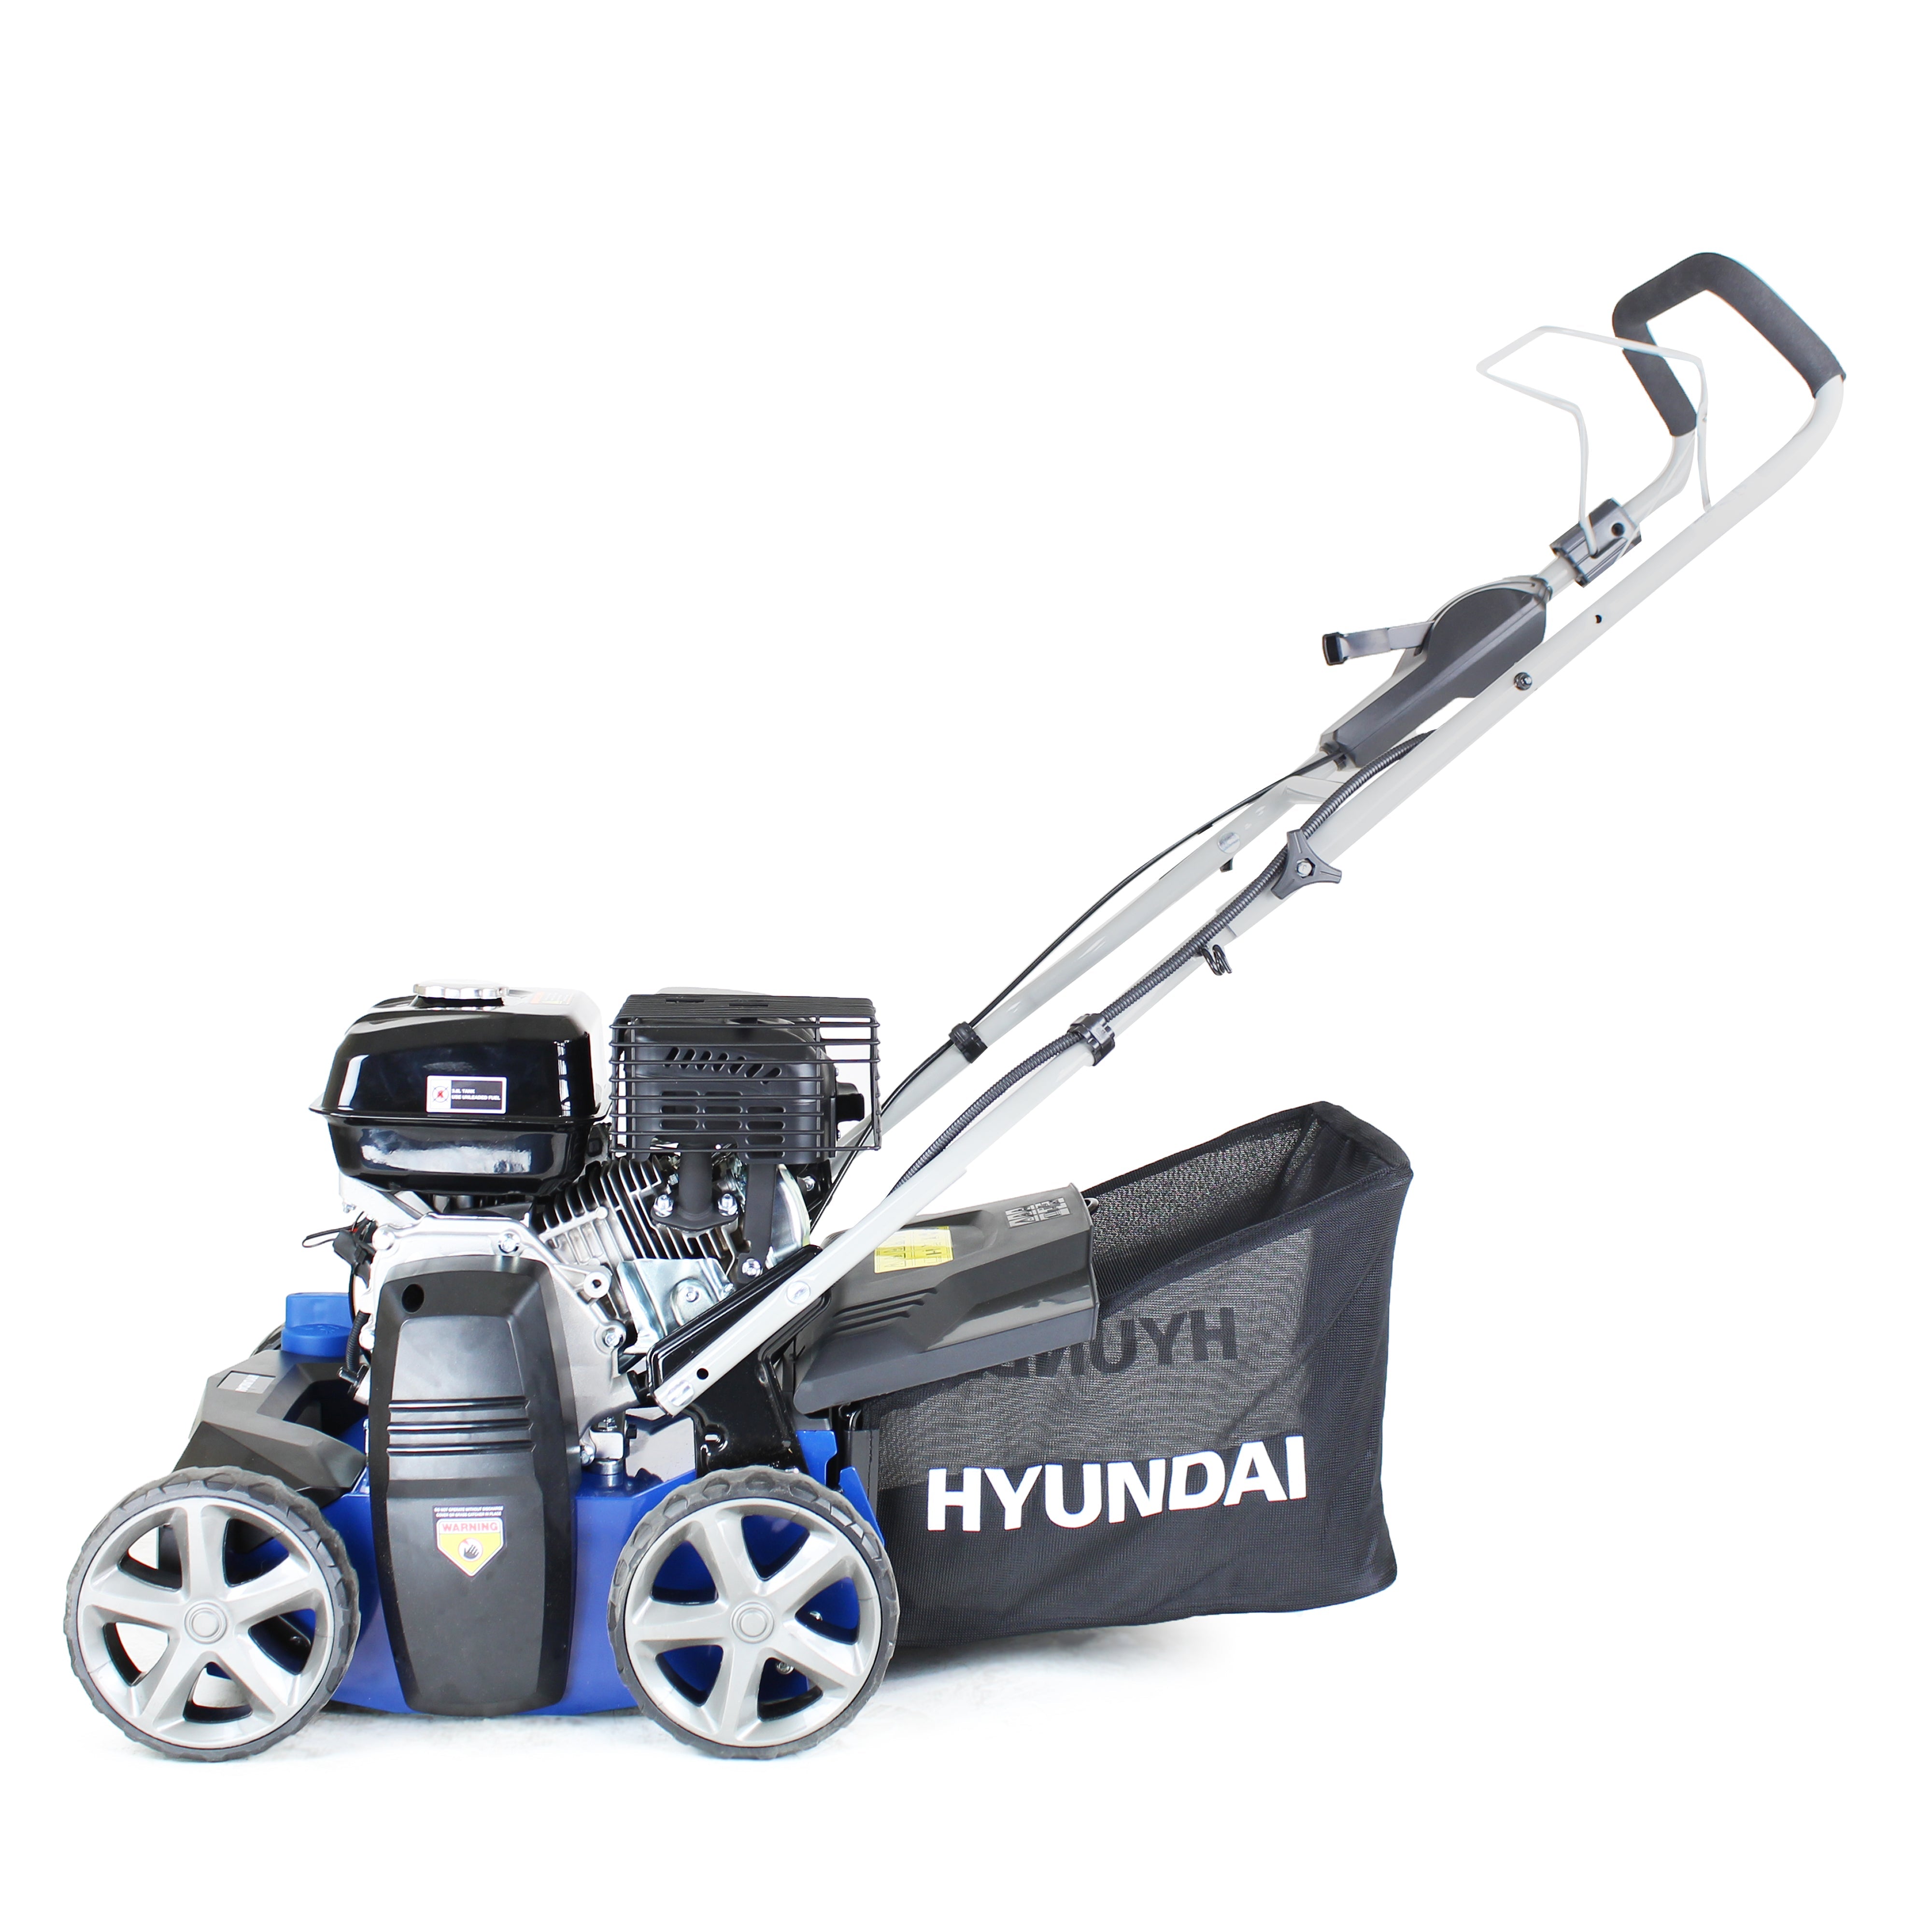 Hyundai 212cc Petrol Lawn Scarifier and Aerator